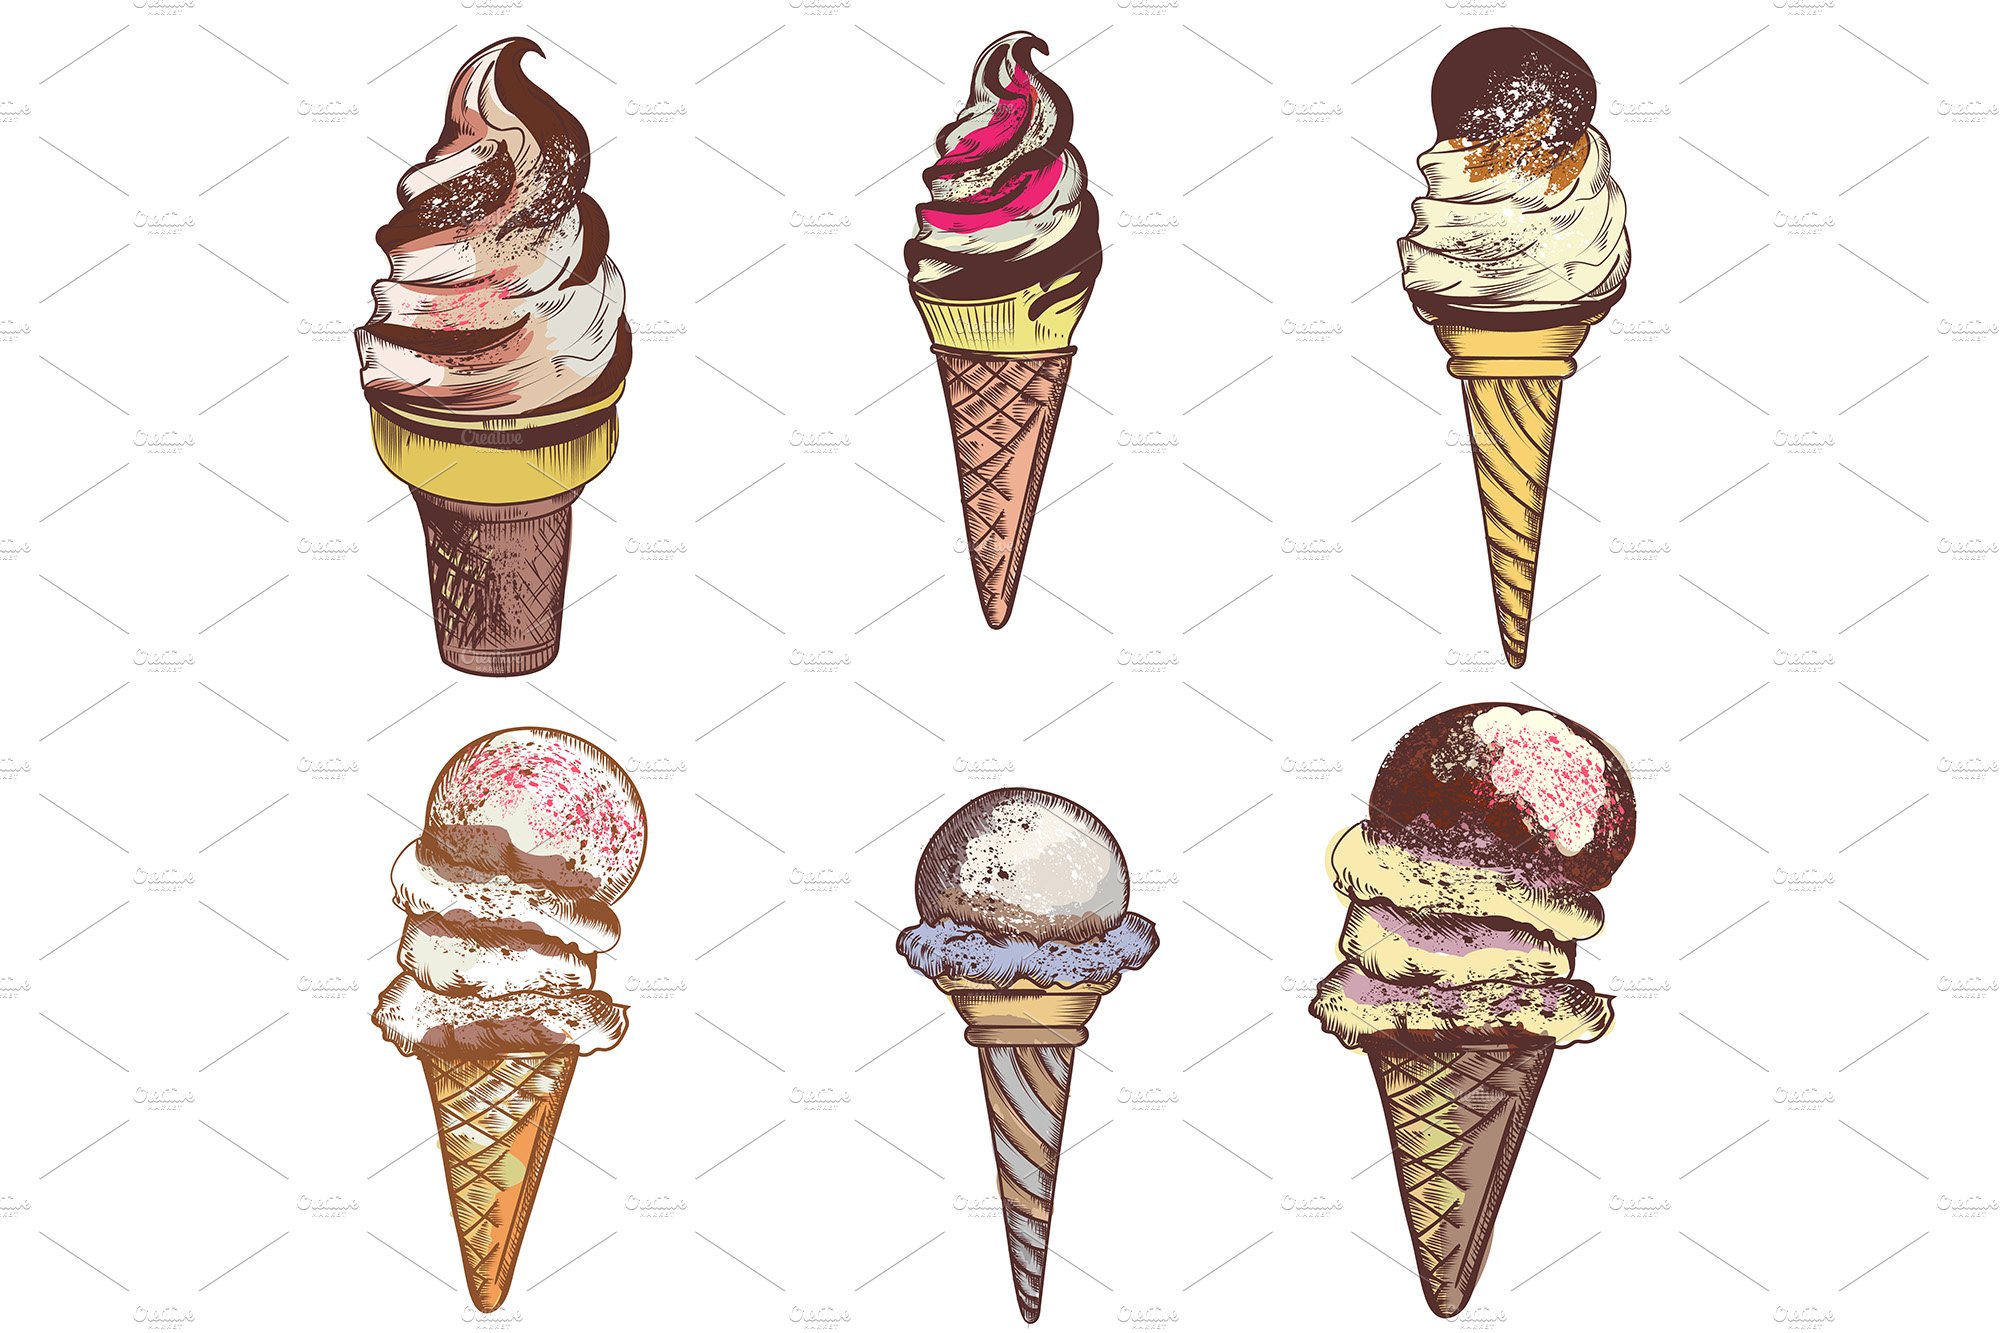 So colorful ice cream set.